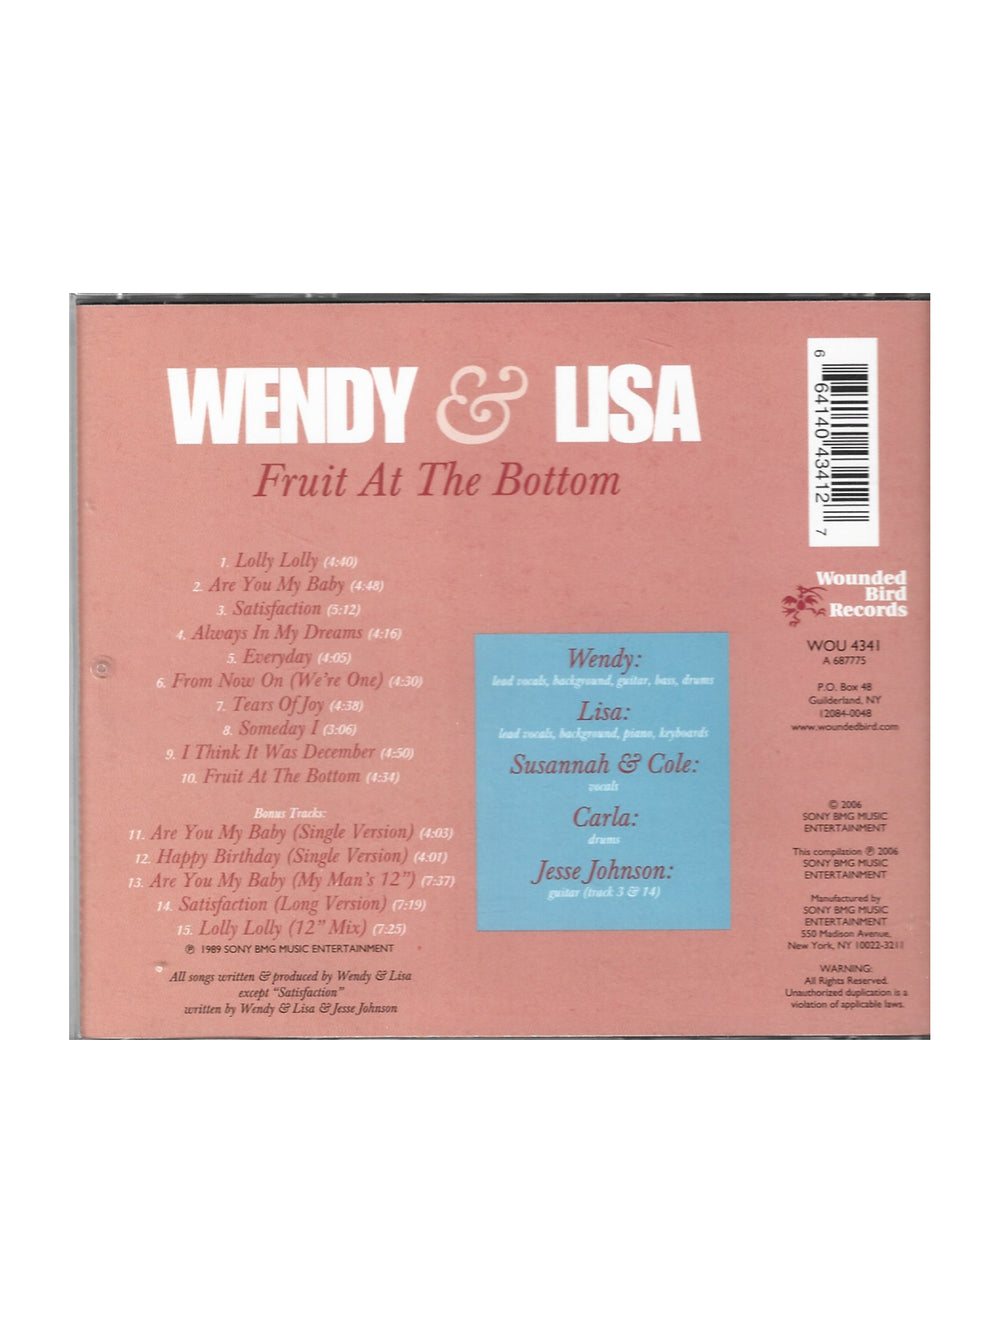 Prince – Wendy & Lisa Fruit At The Bottom 5 Additional Tracks CD Album EU Preloved: 2006